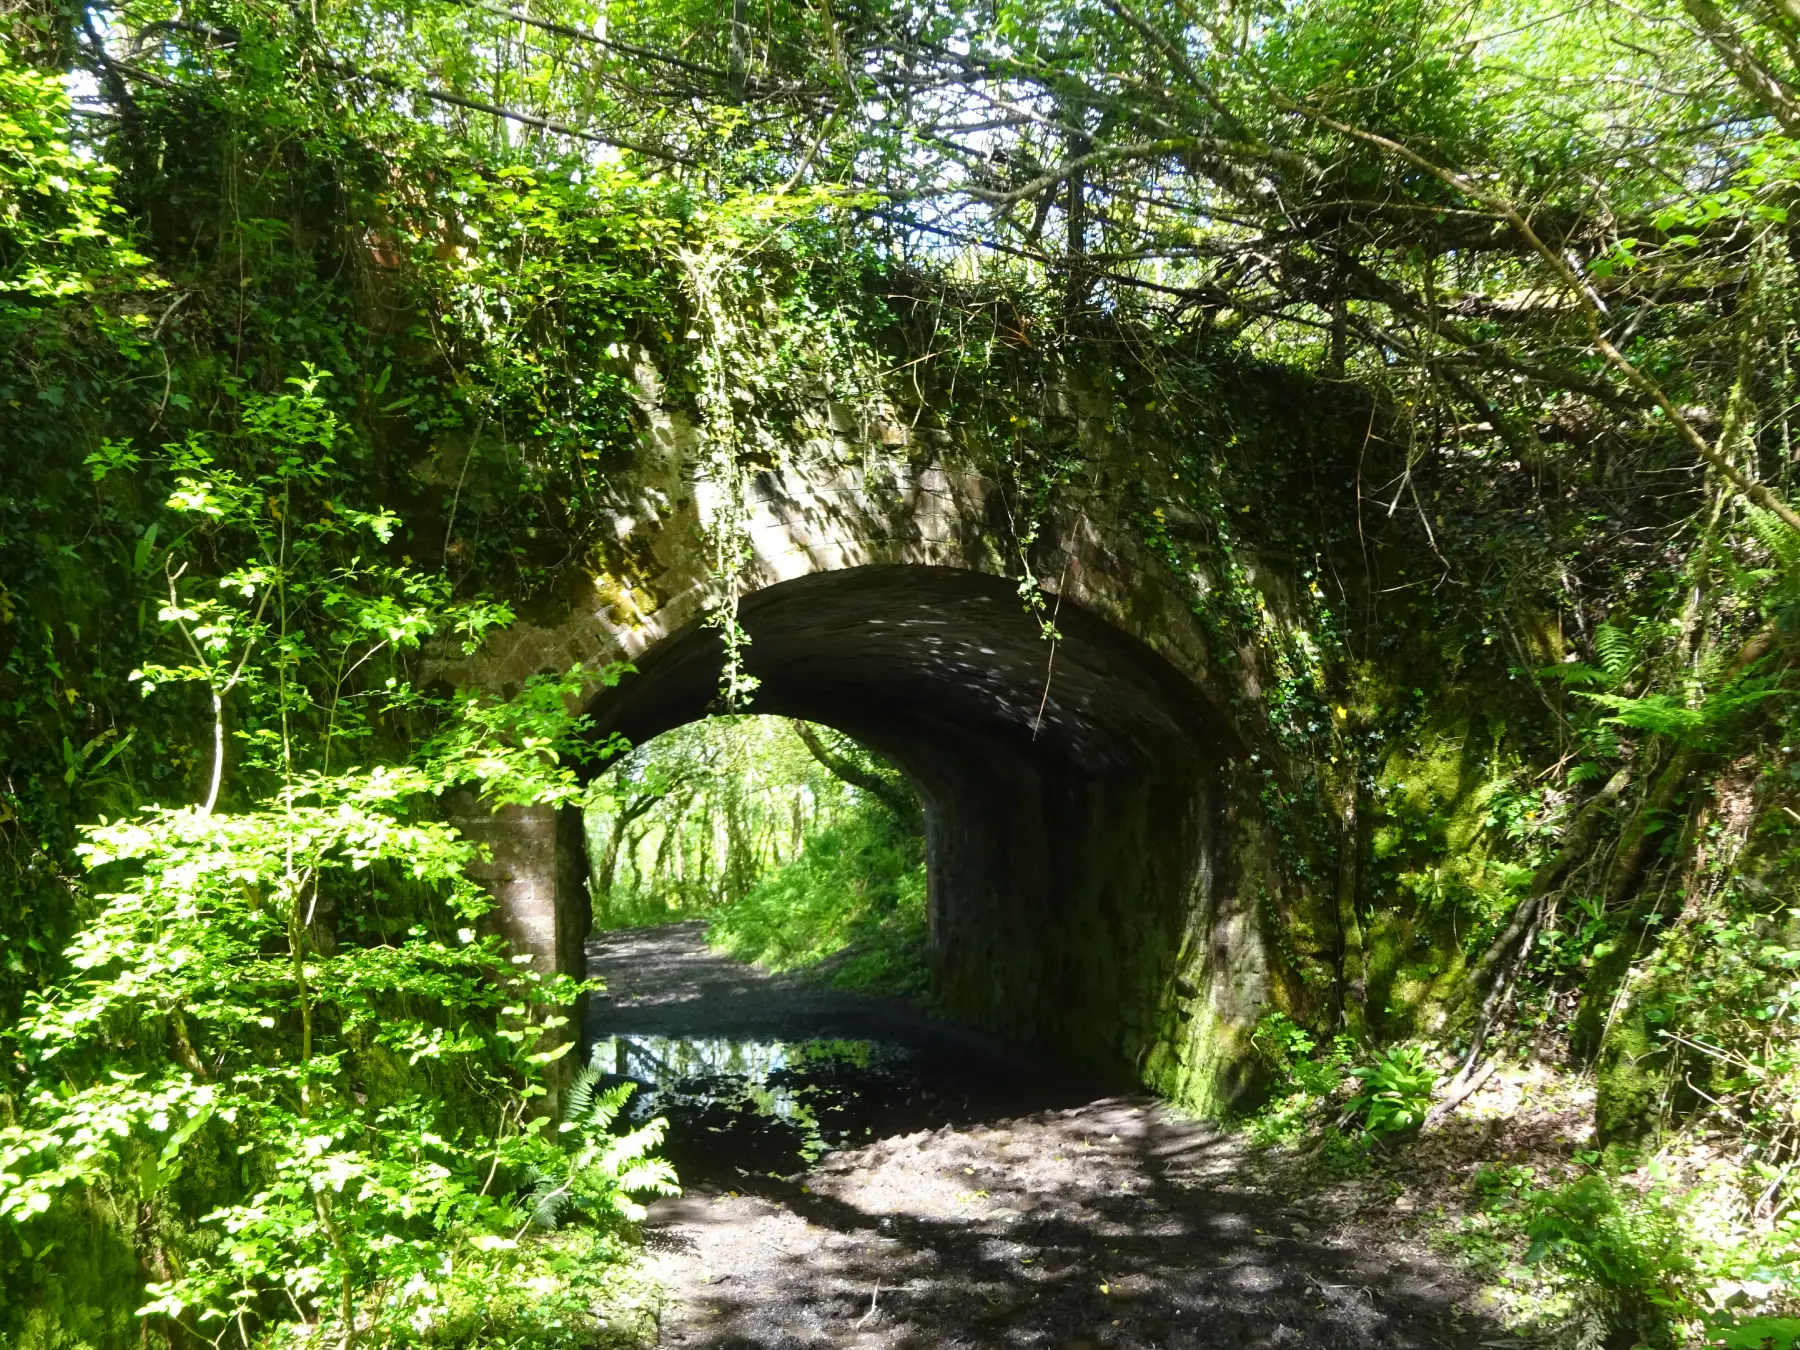 The bridleway passes under the old railway line to Tavistock